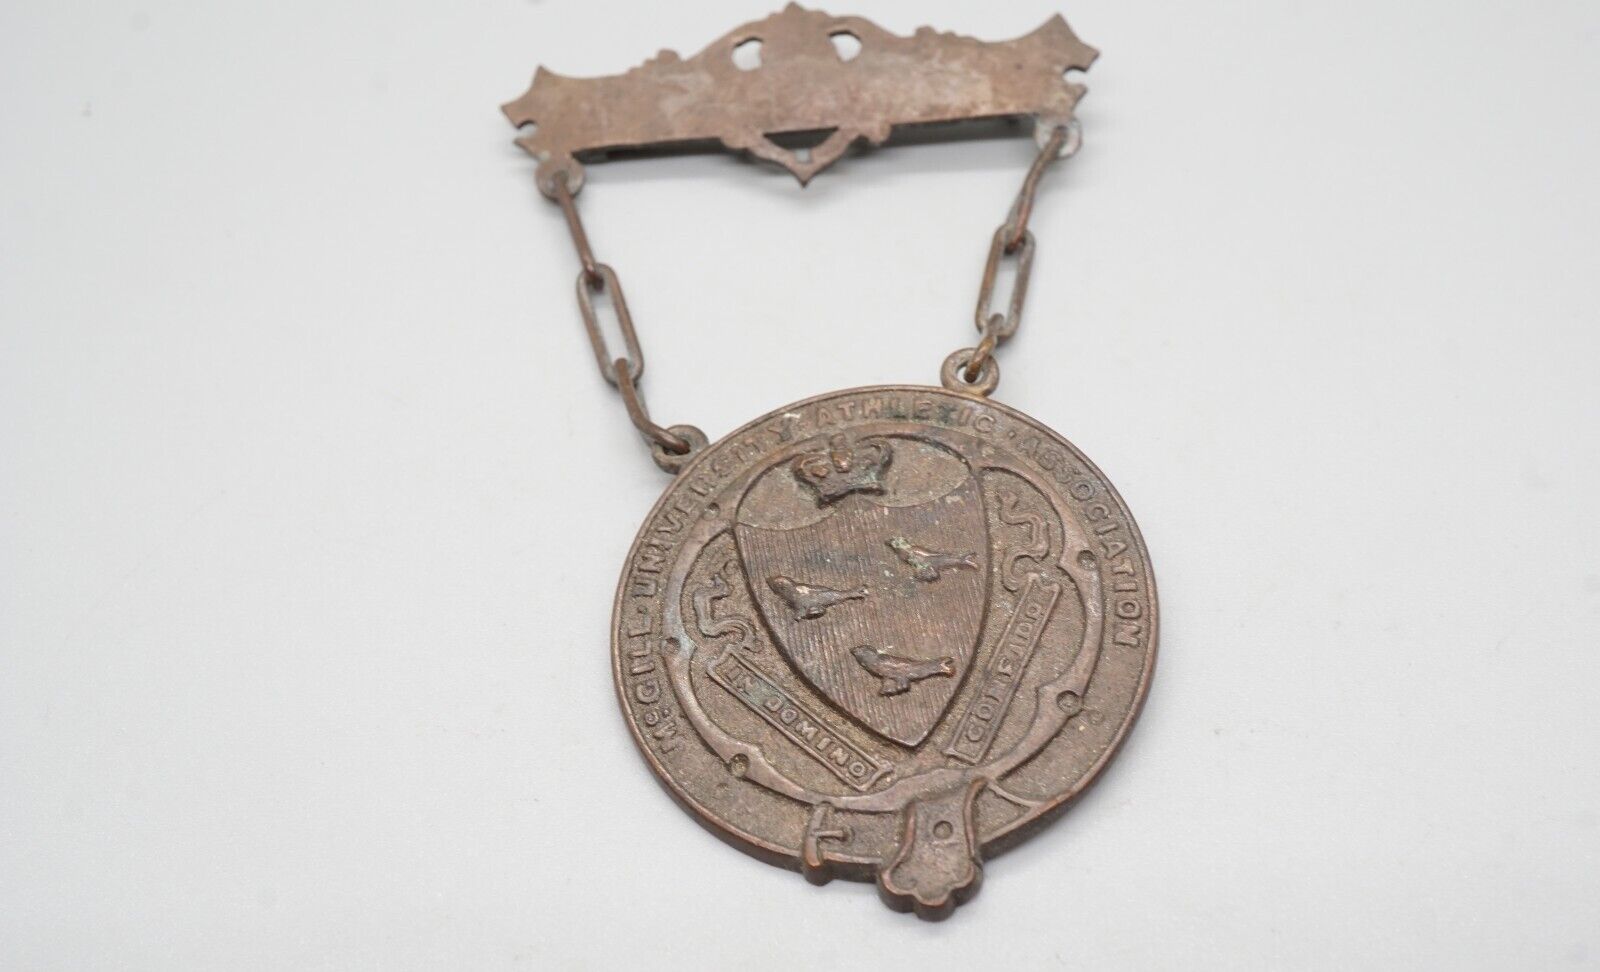 Antique 1880s-1900s McGill University Athletic Association Medal